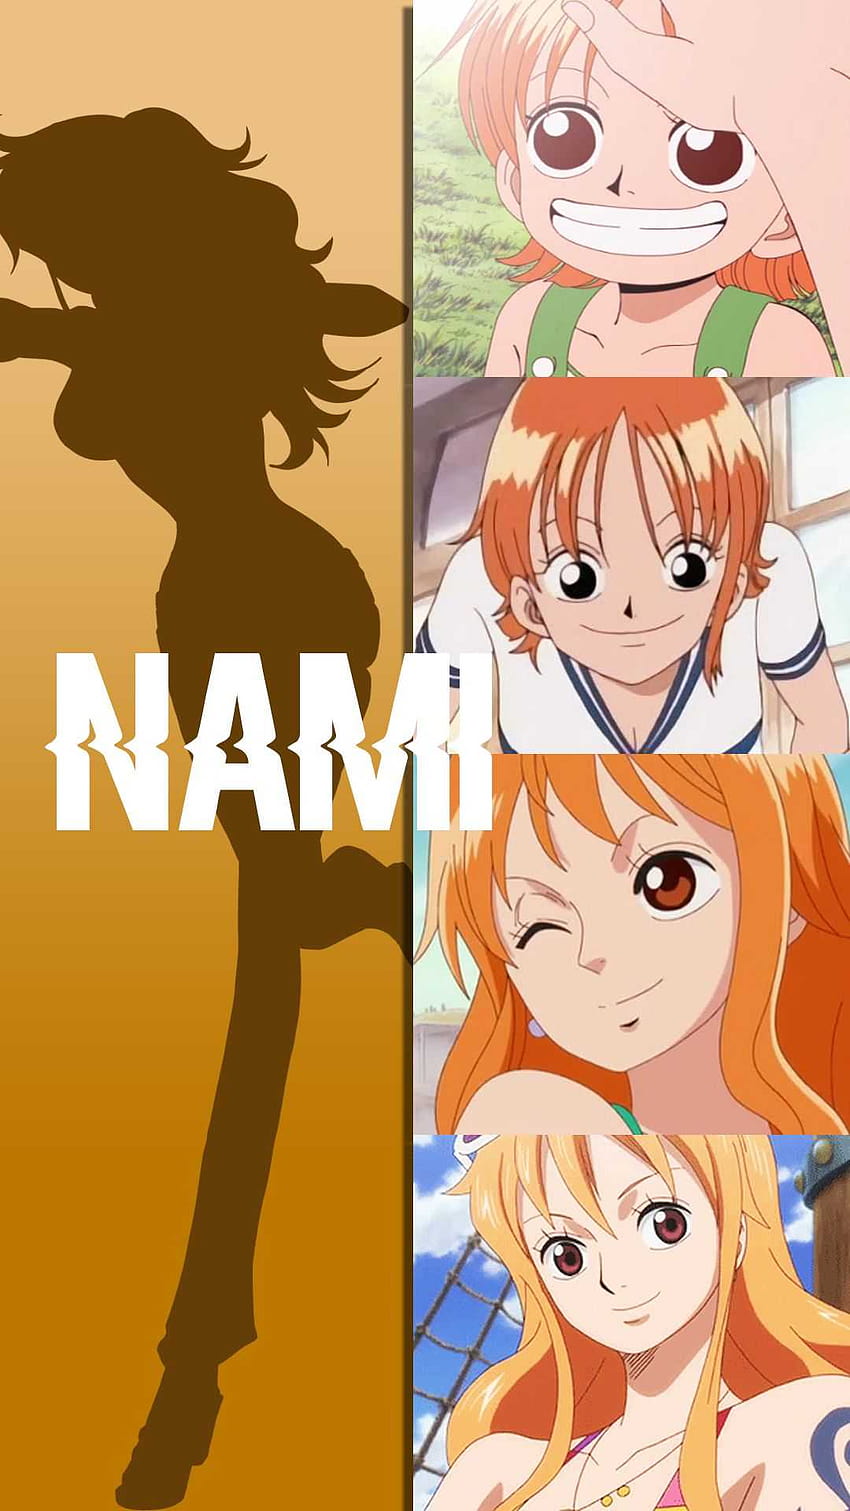 Wallpaper : anime, One Piece, mythology, Nami, screenshot, computer  wallpaper, fictional character 1920x1080 - Amat0r - 307276 - HD Wallpapers  - WallHere